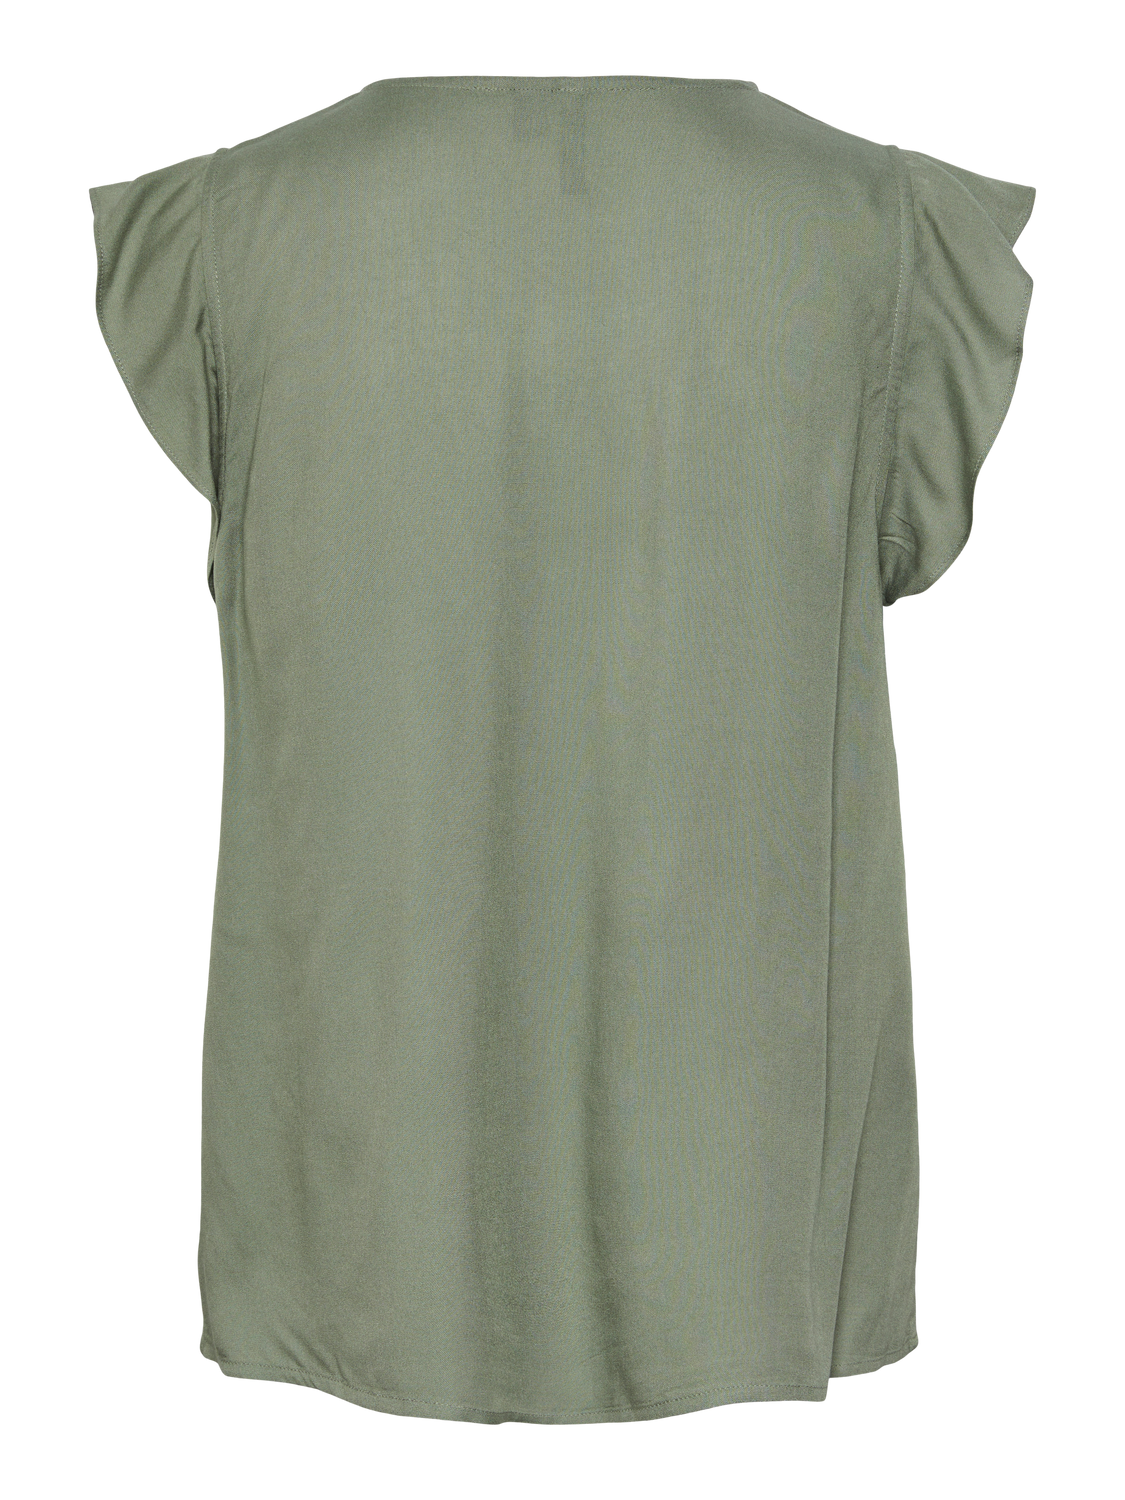 PCNYA T-Shirts & Tops - Hedge Green